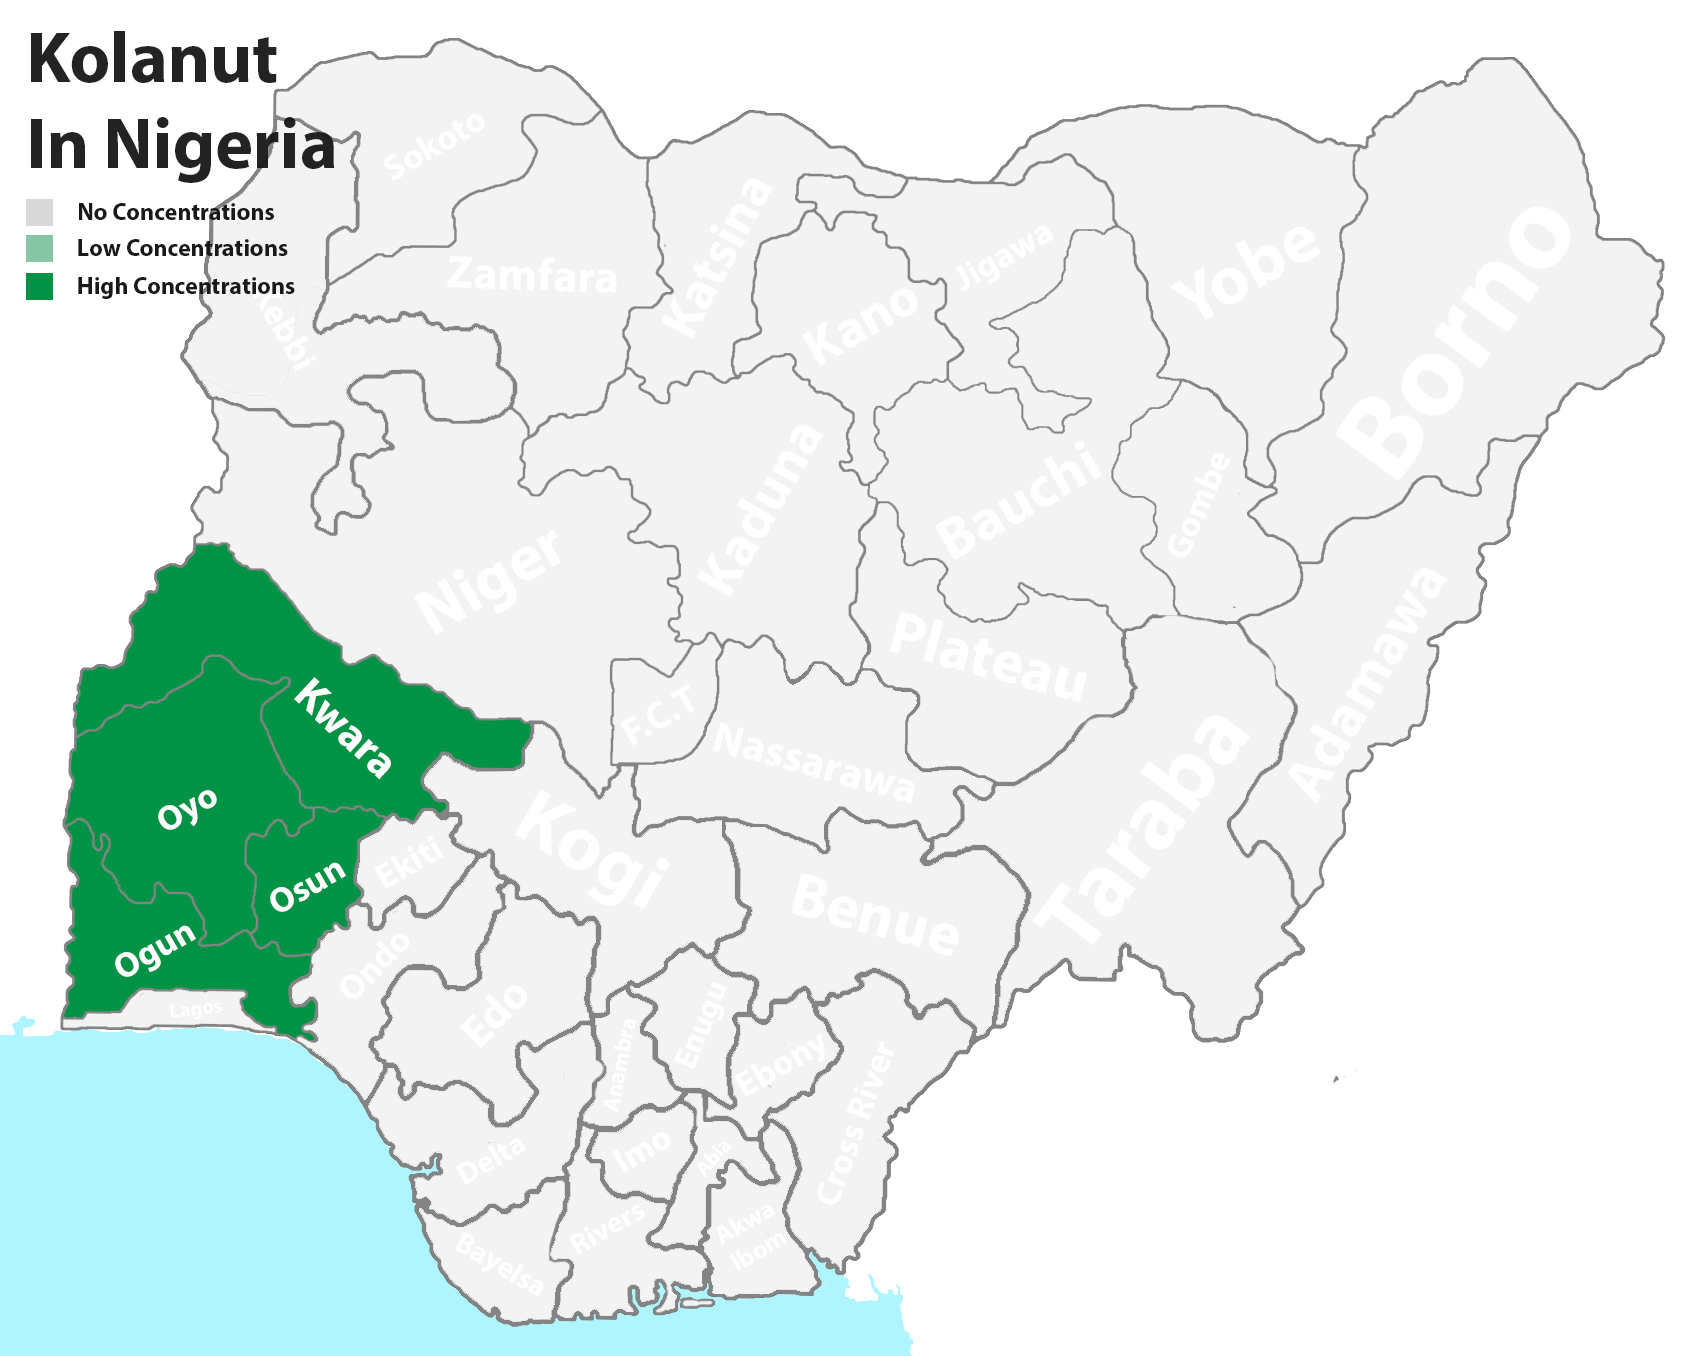 Kolanut producing states in Nigeria